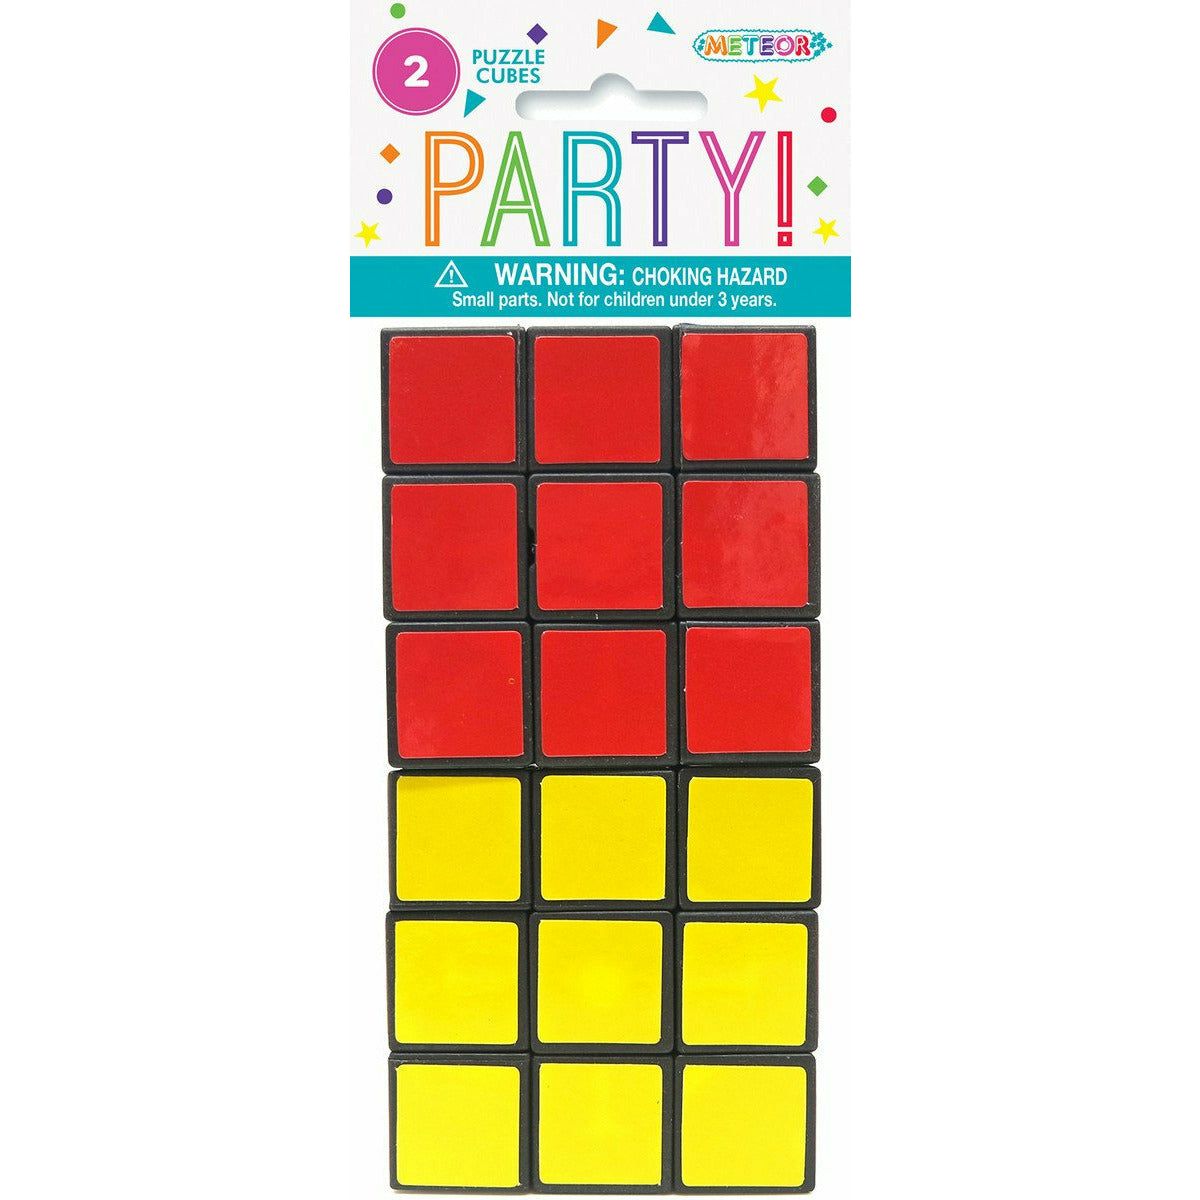 Puzzle Cubes Party Favors 2Pk - Dollars and Sense